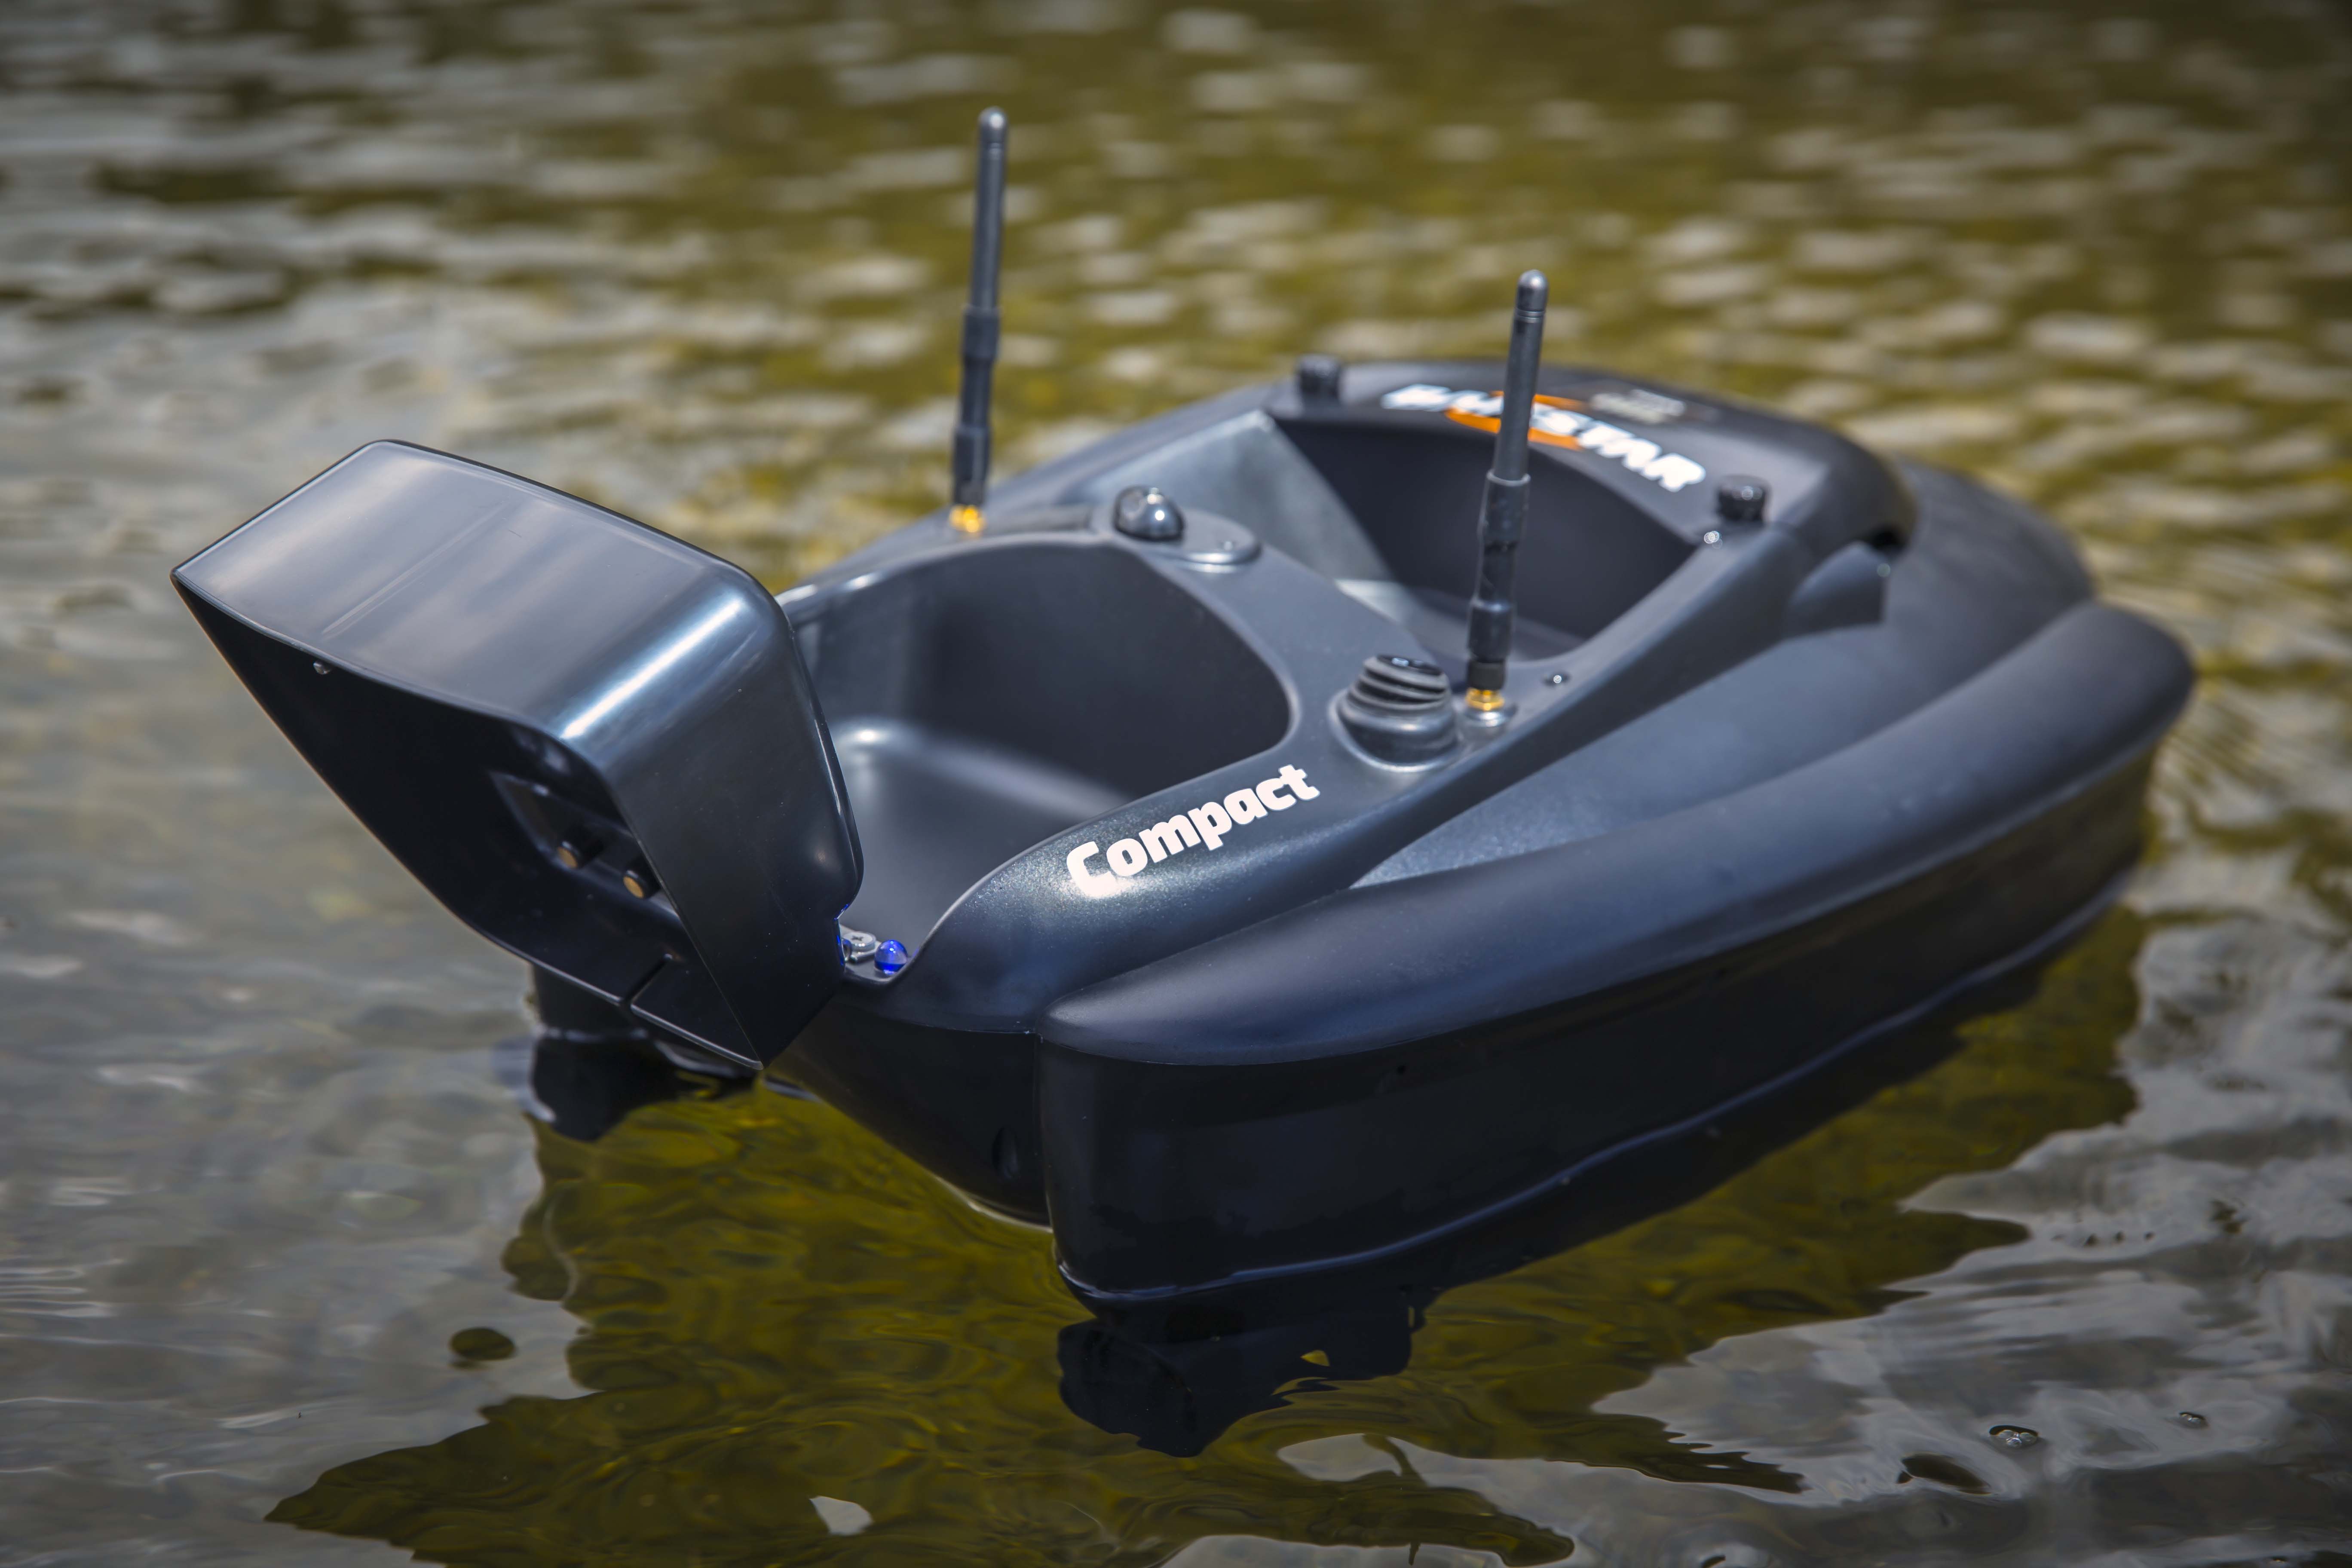 BaitStar Voerboot Compact Black + Sonartab Sonda